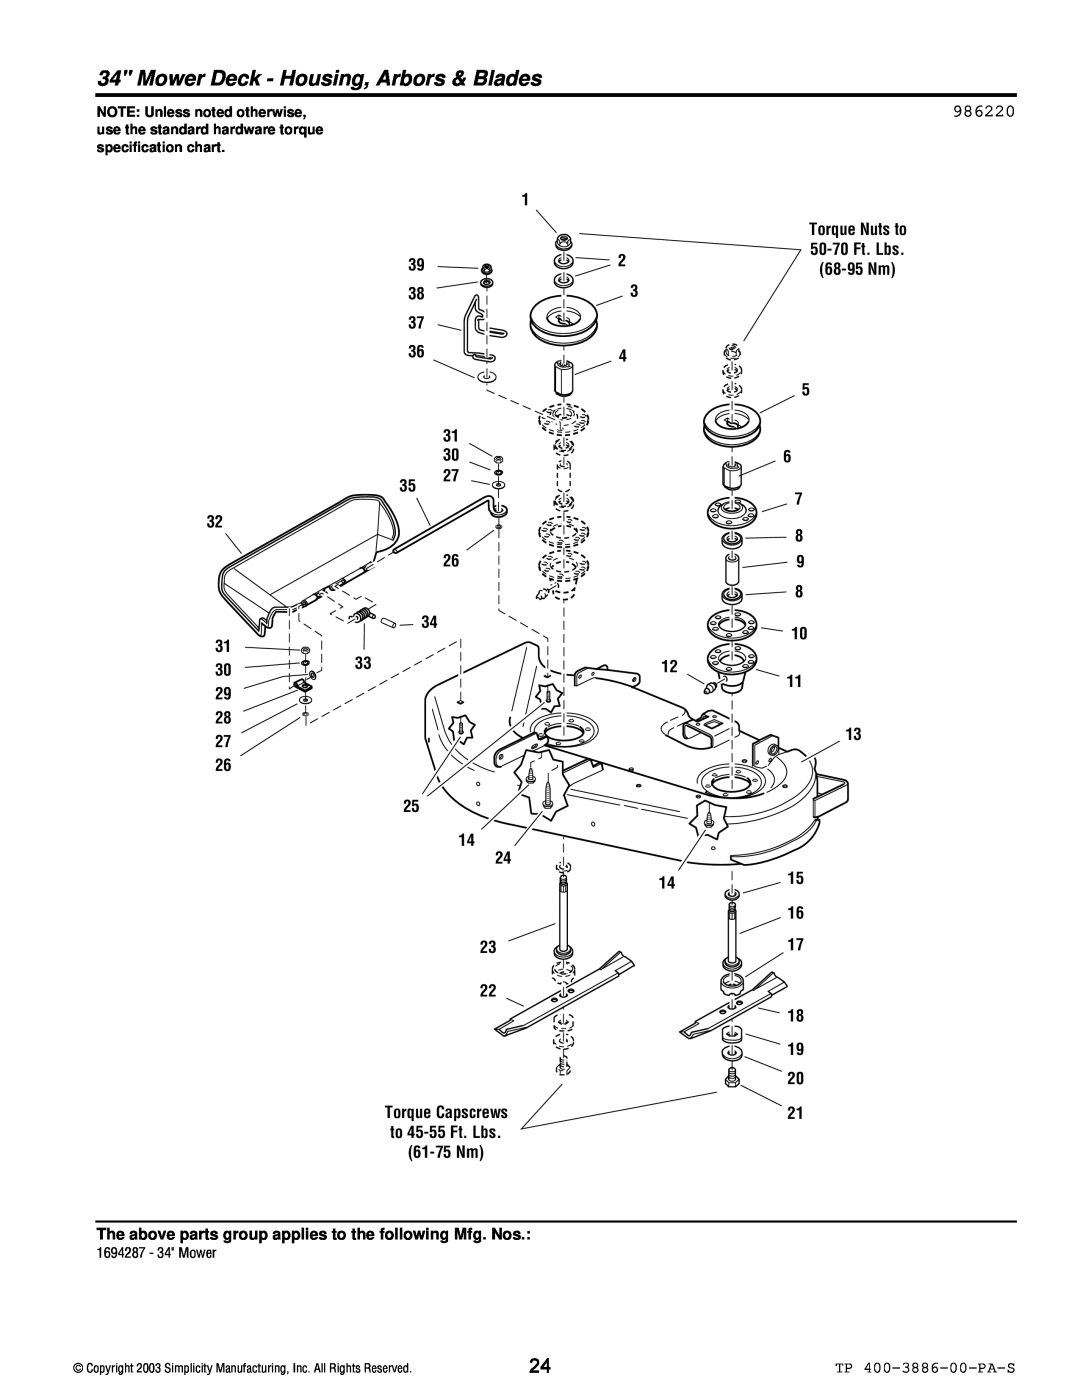 Simplicity Series Transaxle manual Mower Deck - Housing, Arbors & Blades, 986220 